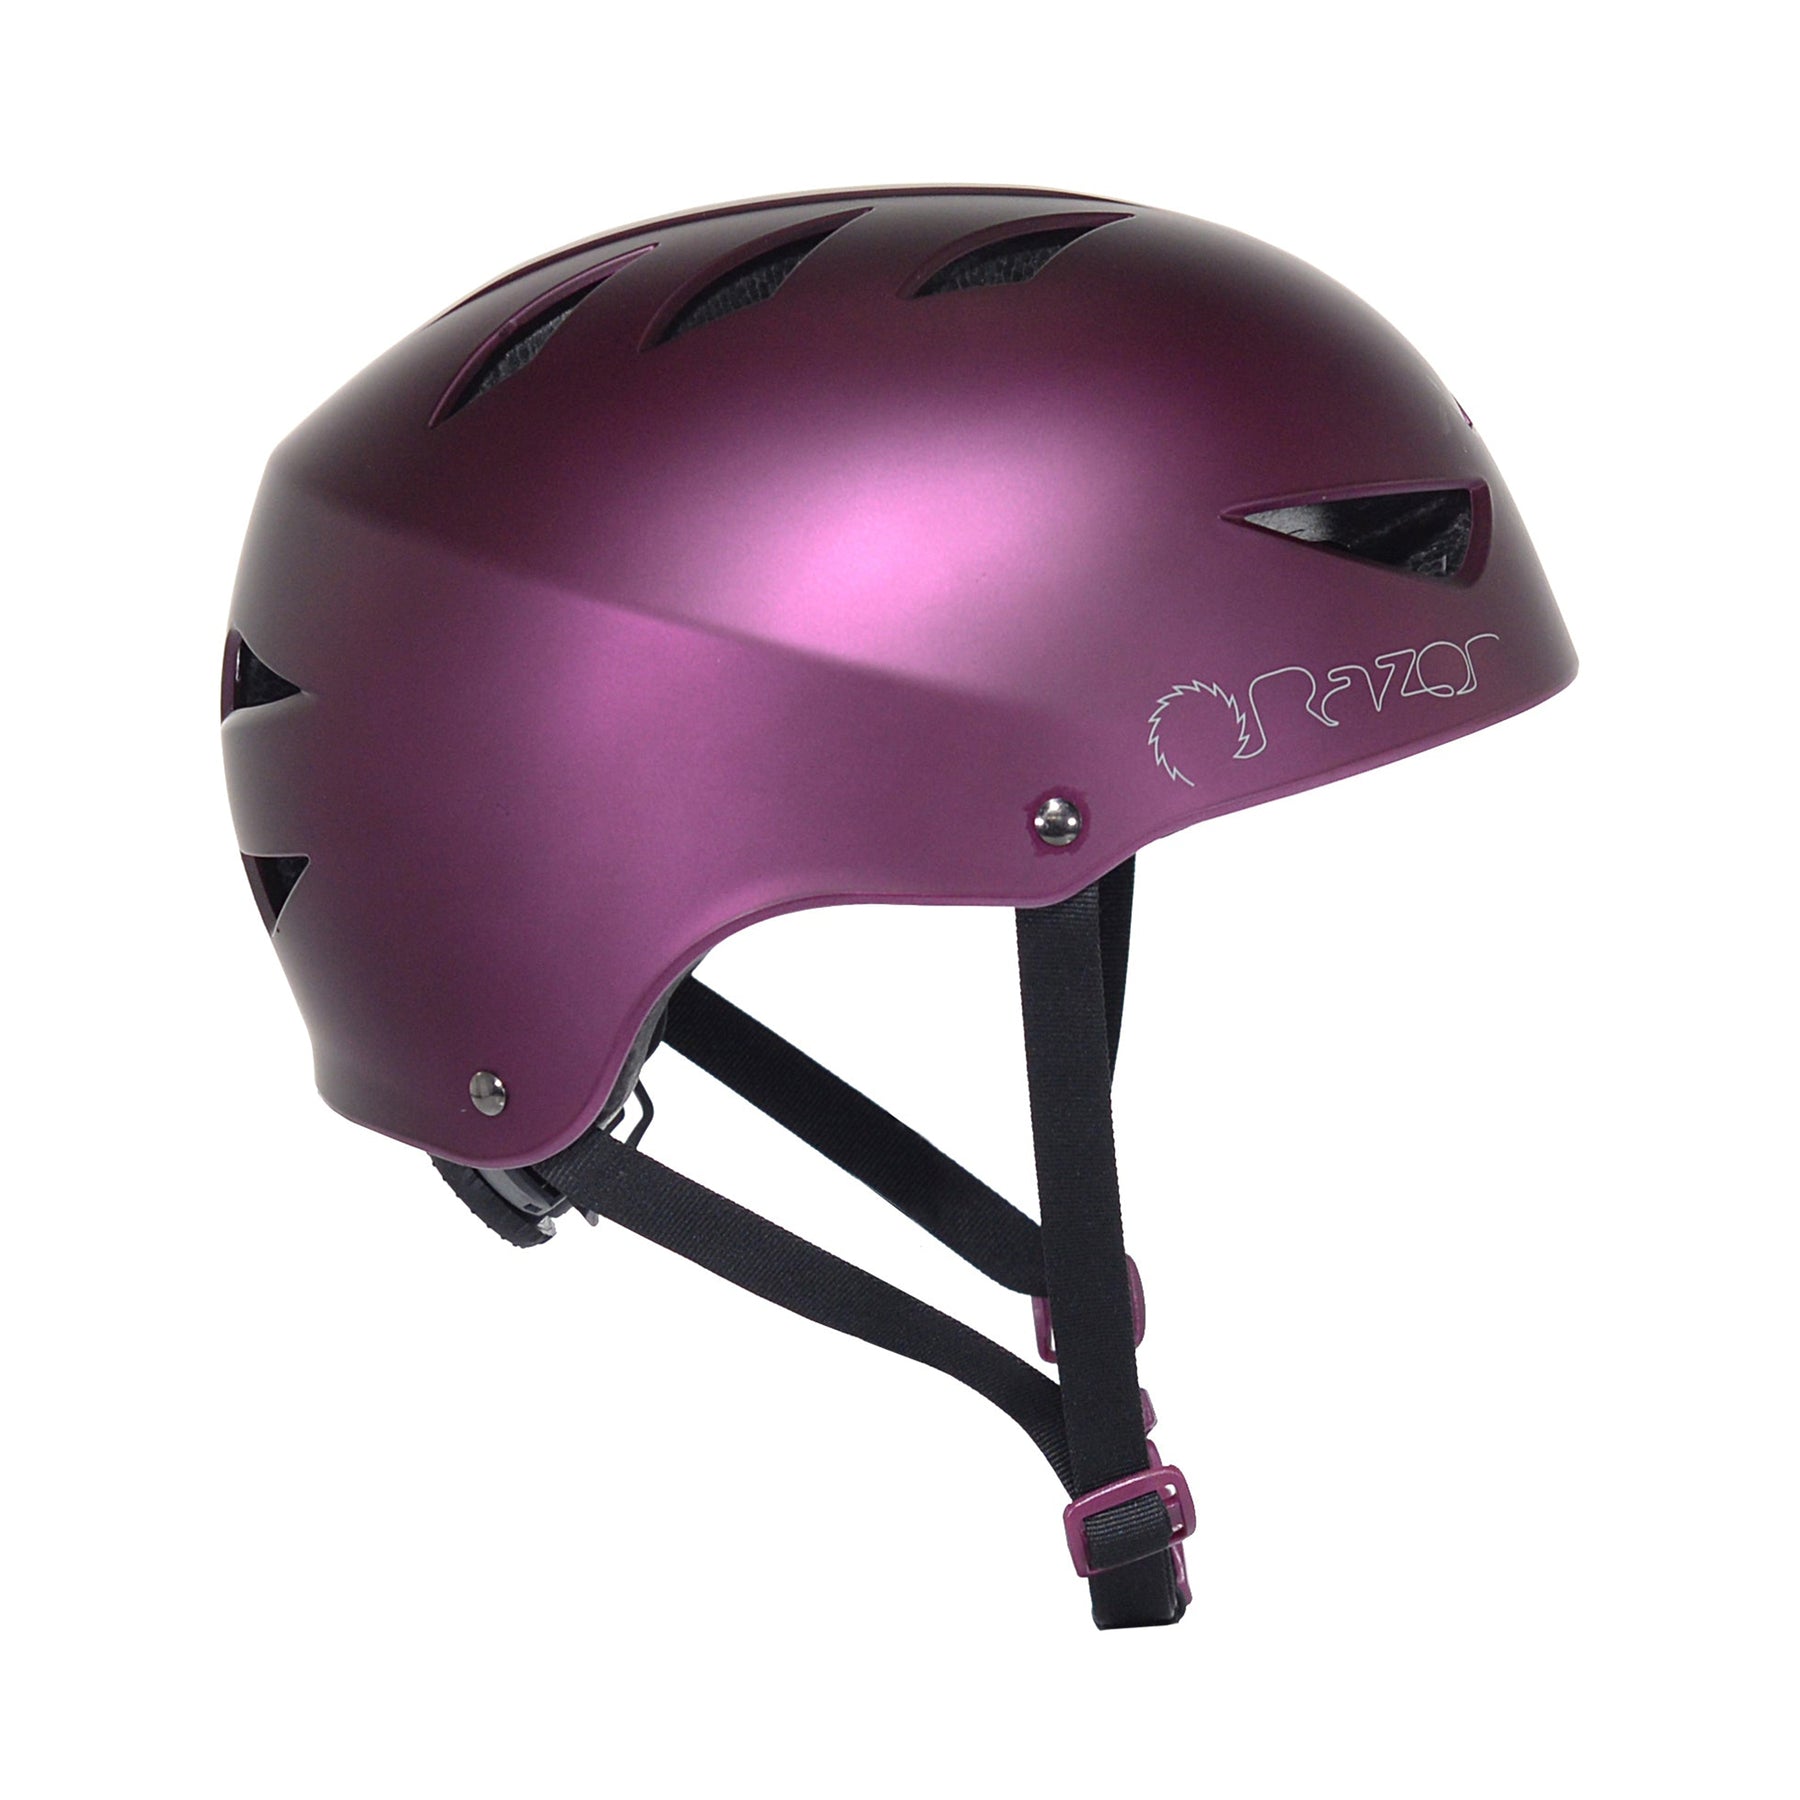 Razor® Adult Multi-Sport Bike Helmet | Helmet for Adults Ages 13+